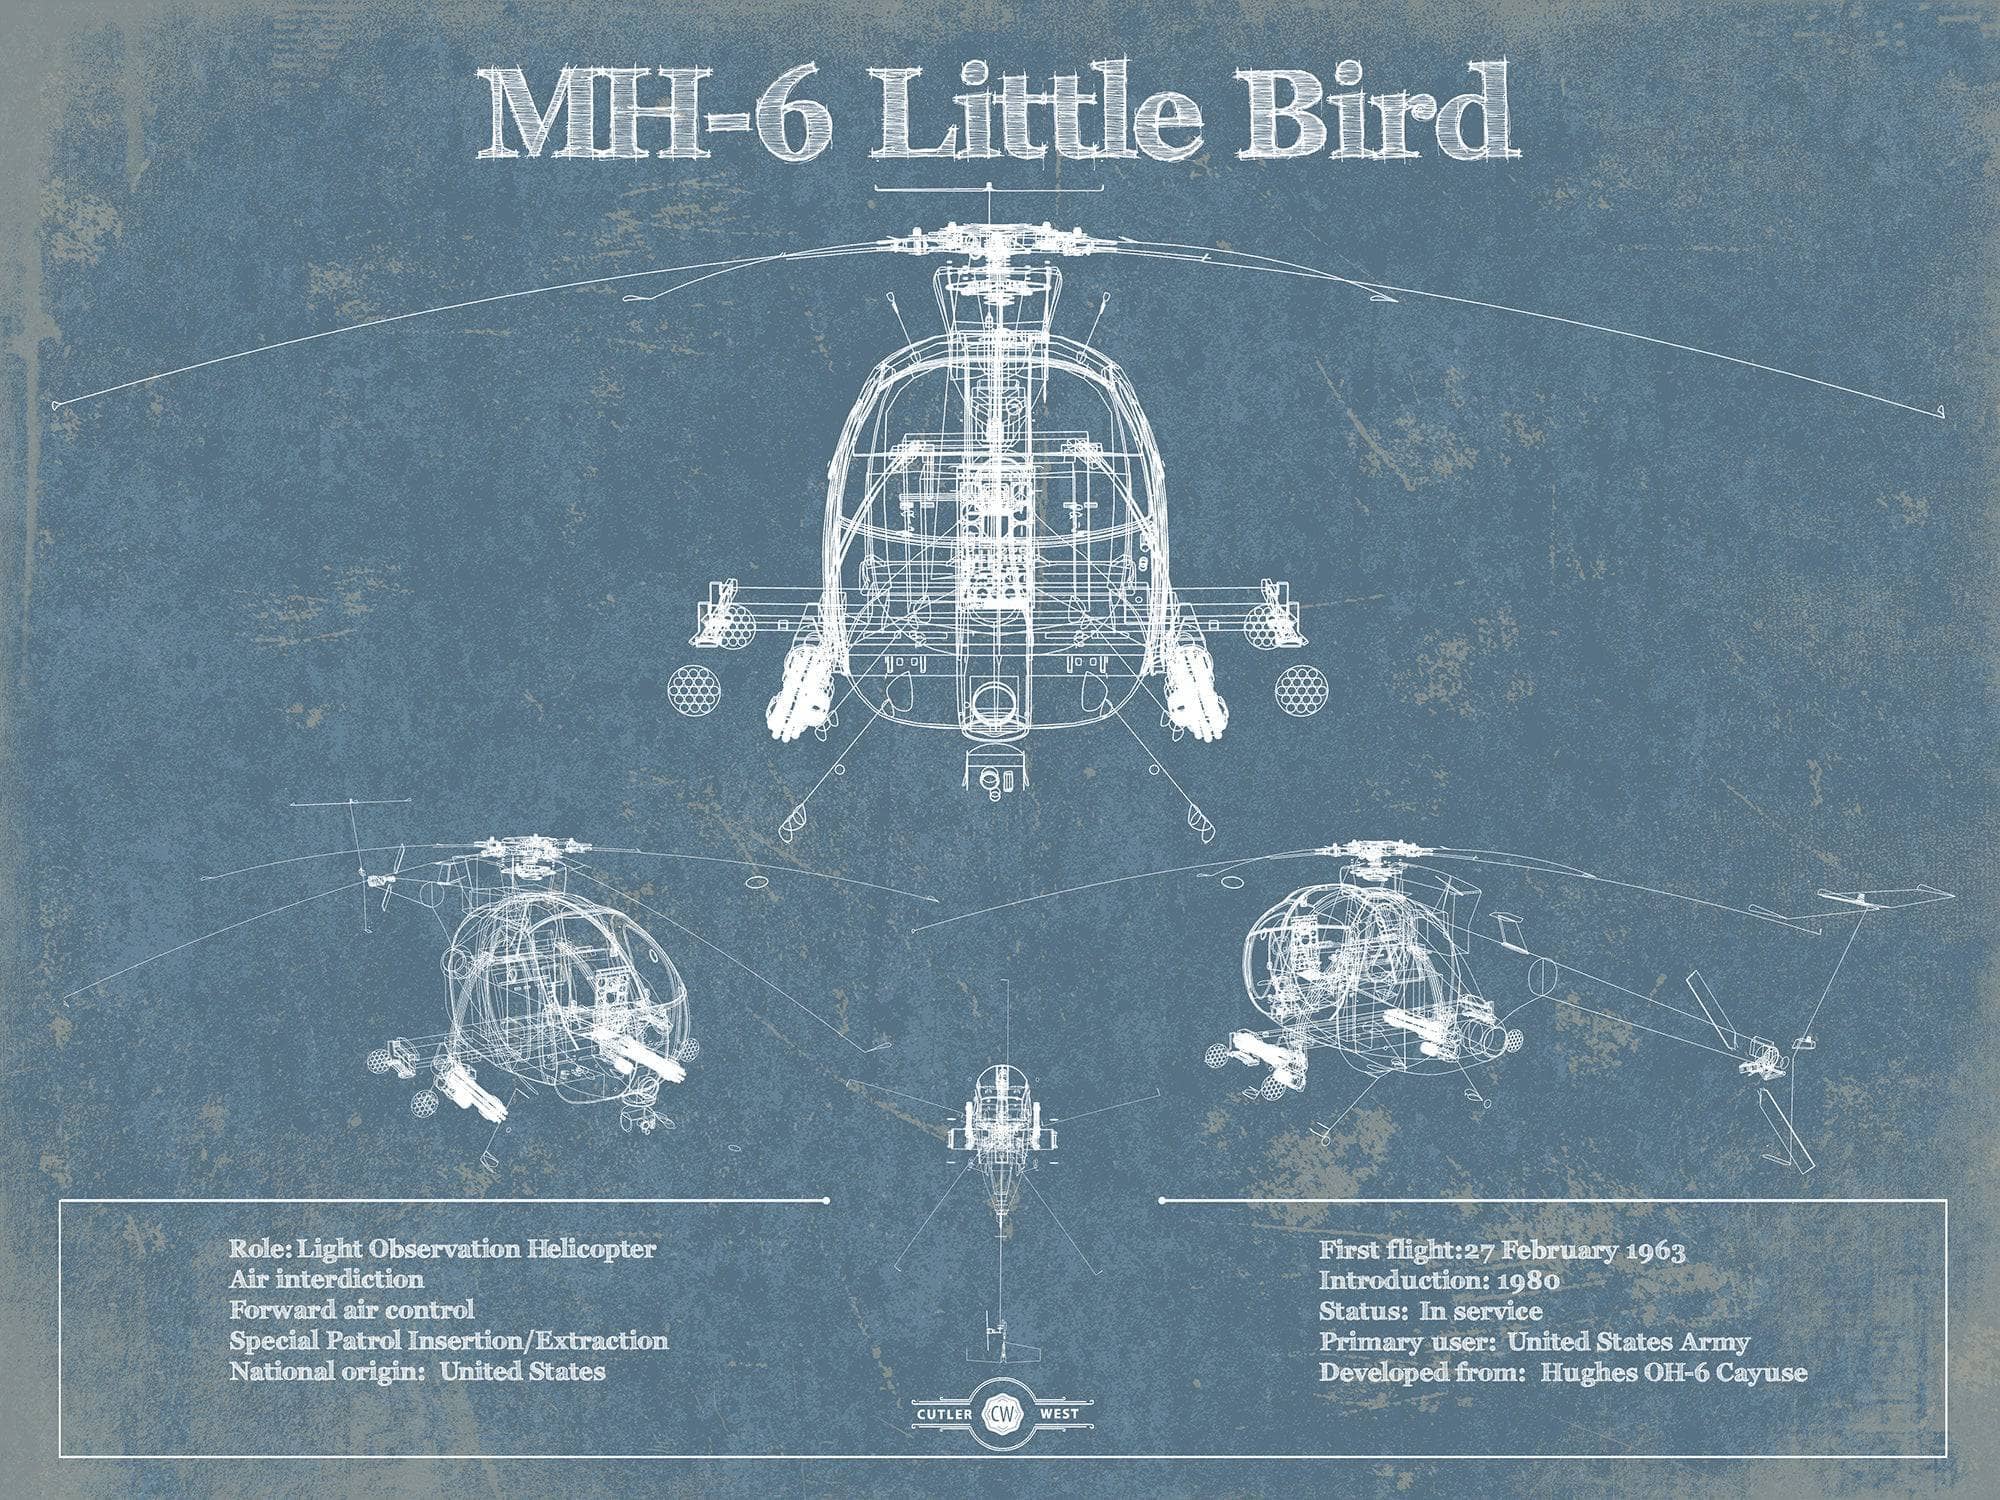 Cutler West Military Aircraft 14" x 11" / Unframed MH-6 Little Bird Helicopter Vintage Aviation Blueprint Military Print 797401713_74121